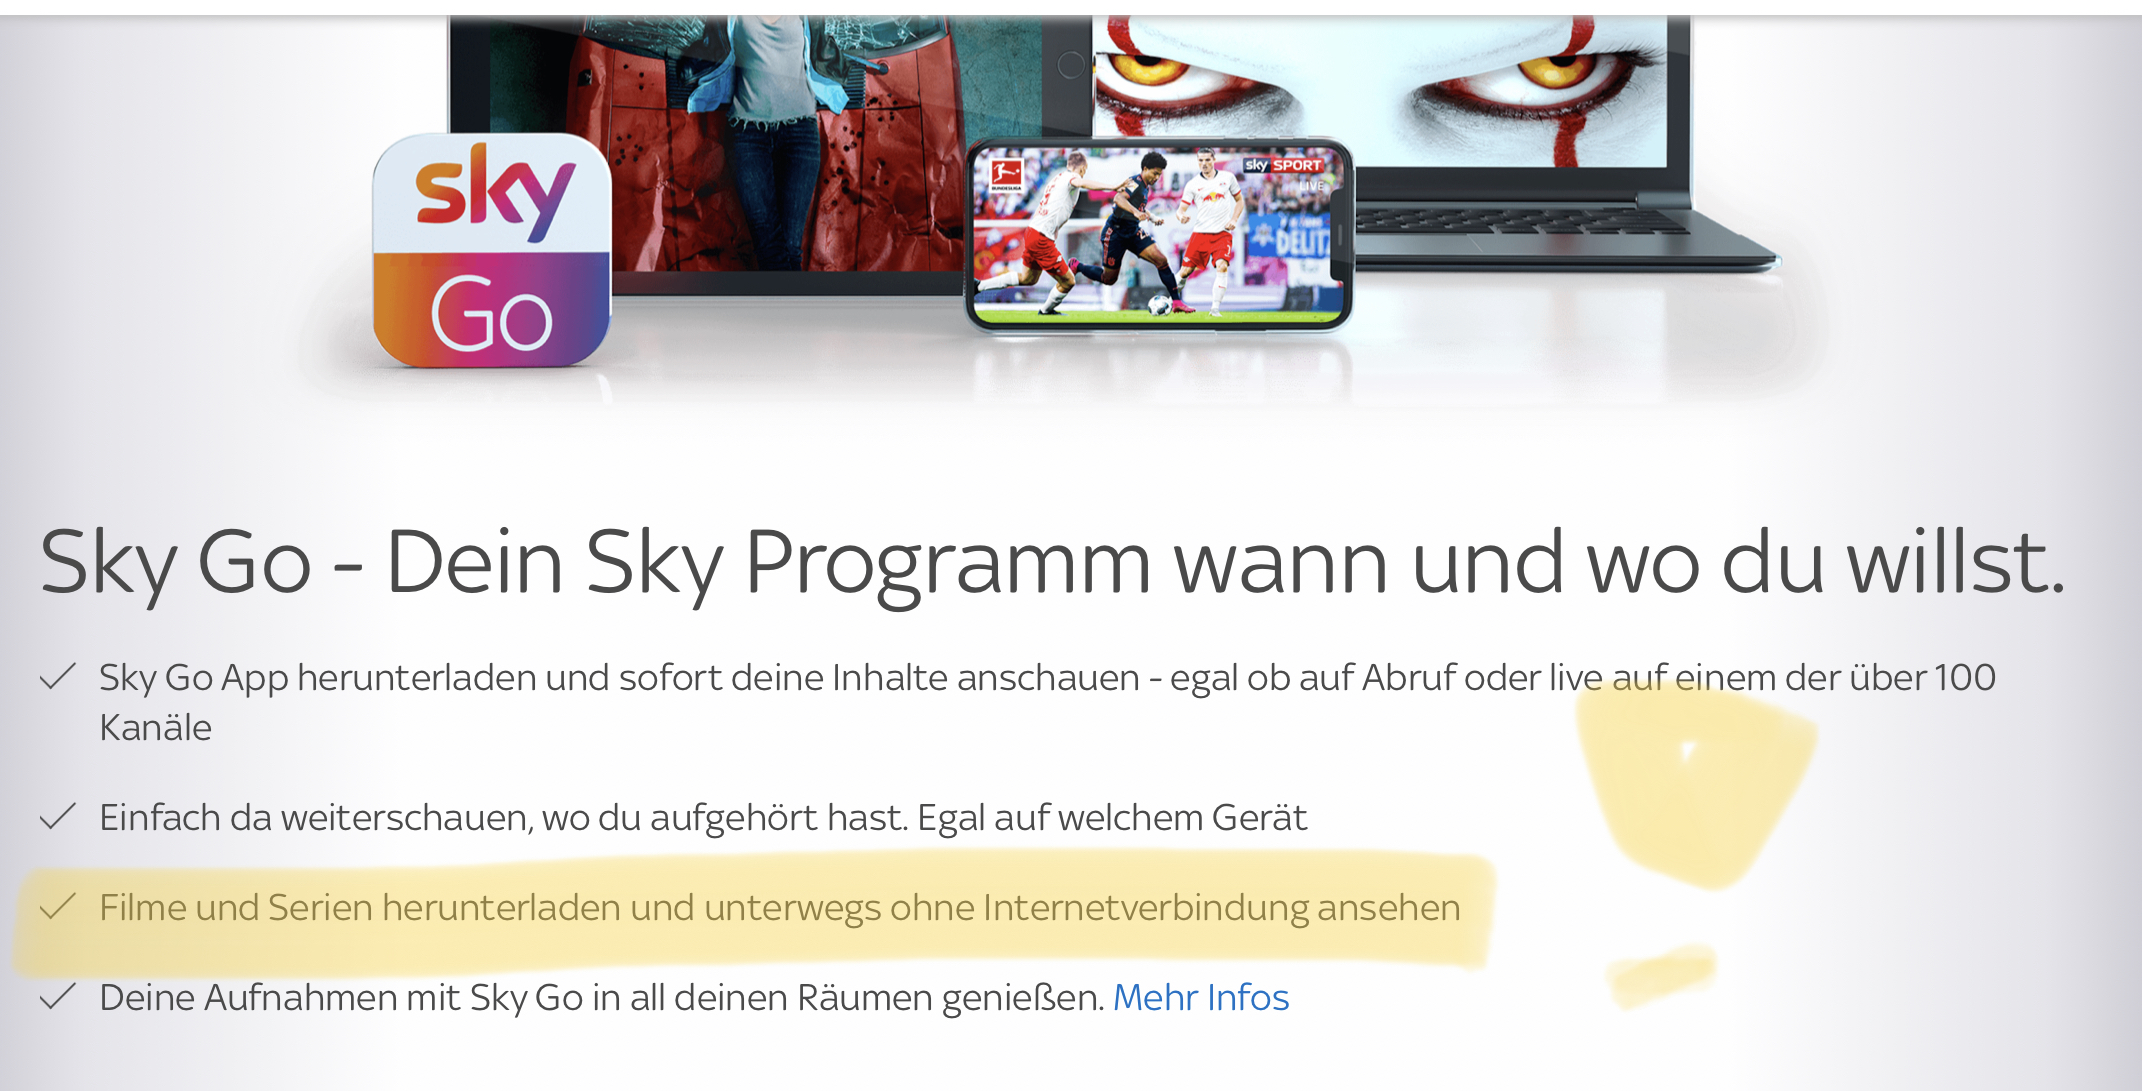 Sky Q Aufnahmen über Sky Go gucken – Seite 81 - Sky Community